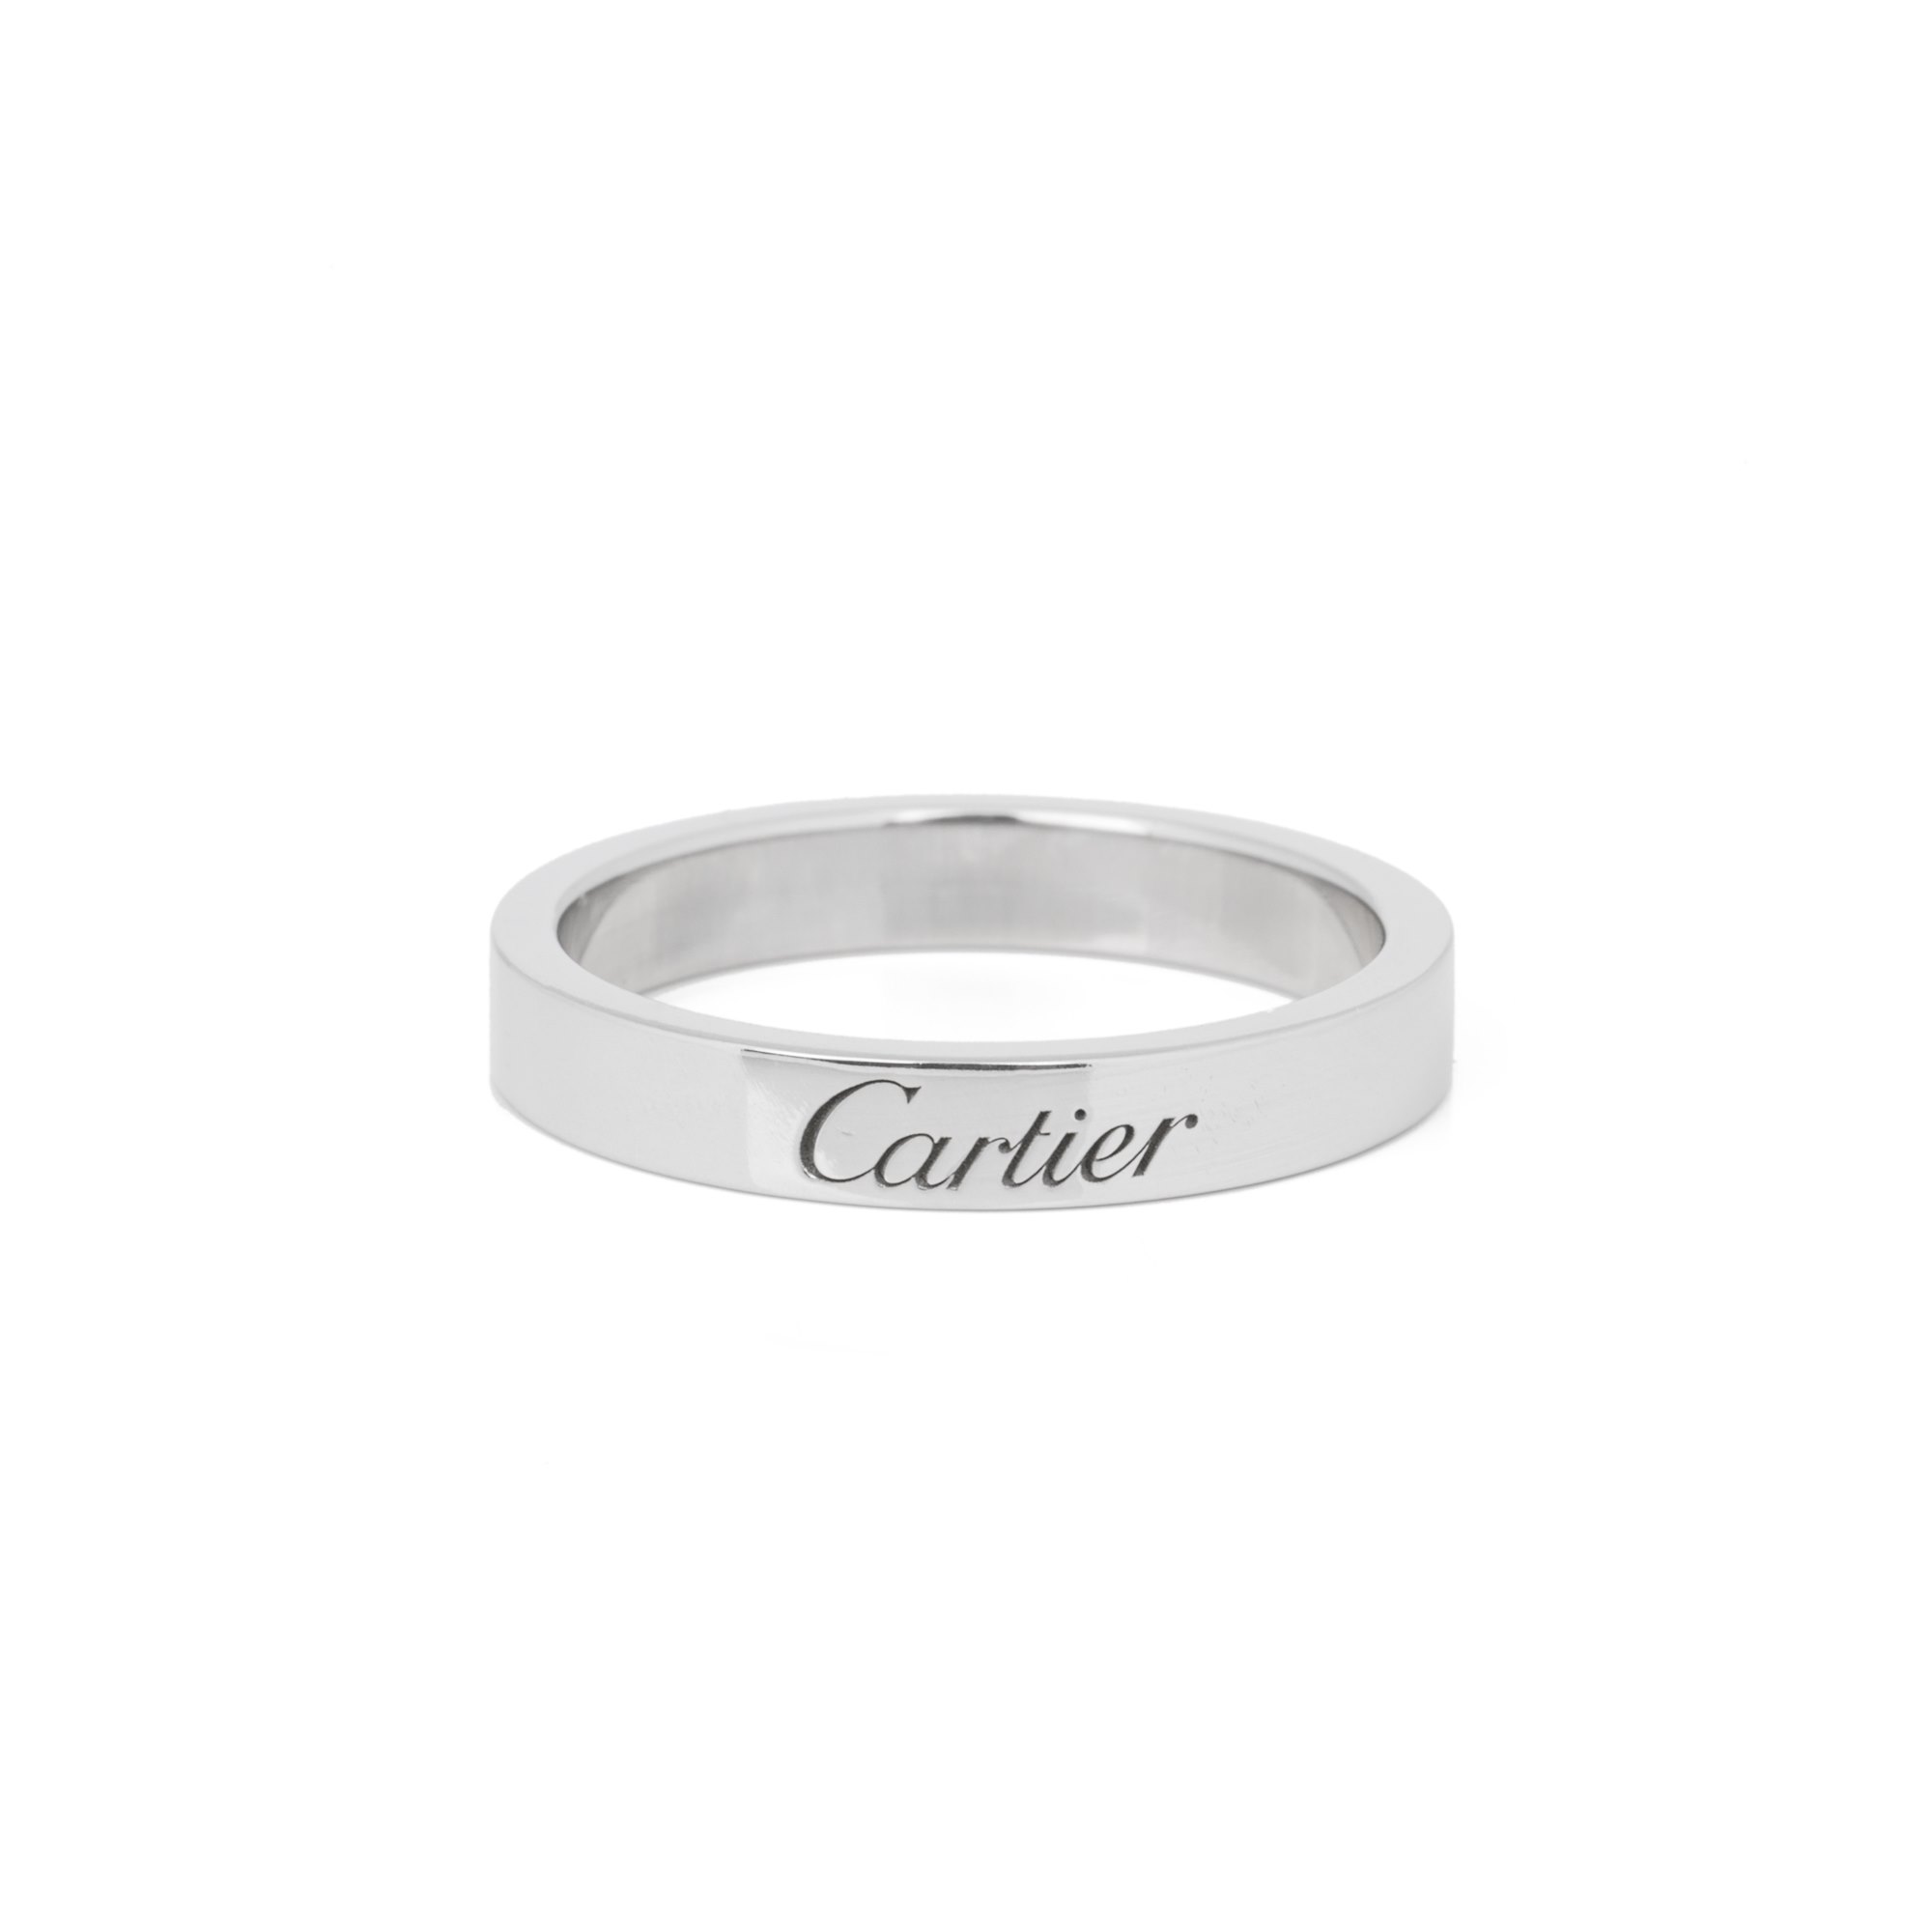 Cartier C de Cartier Wedding Band Ring